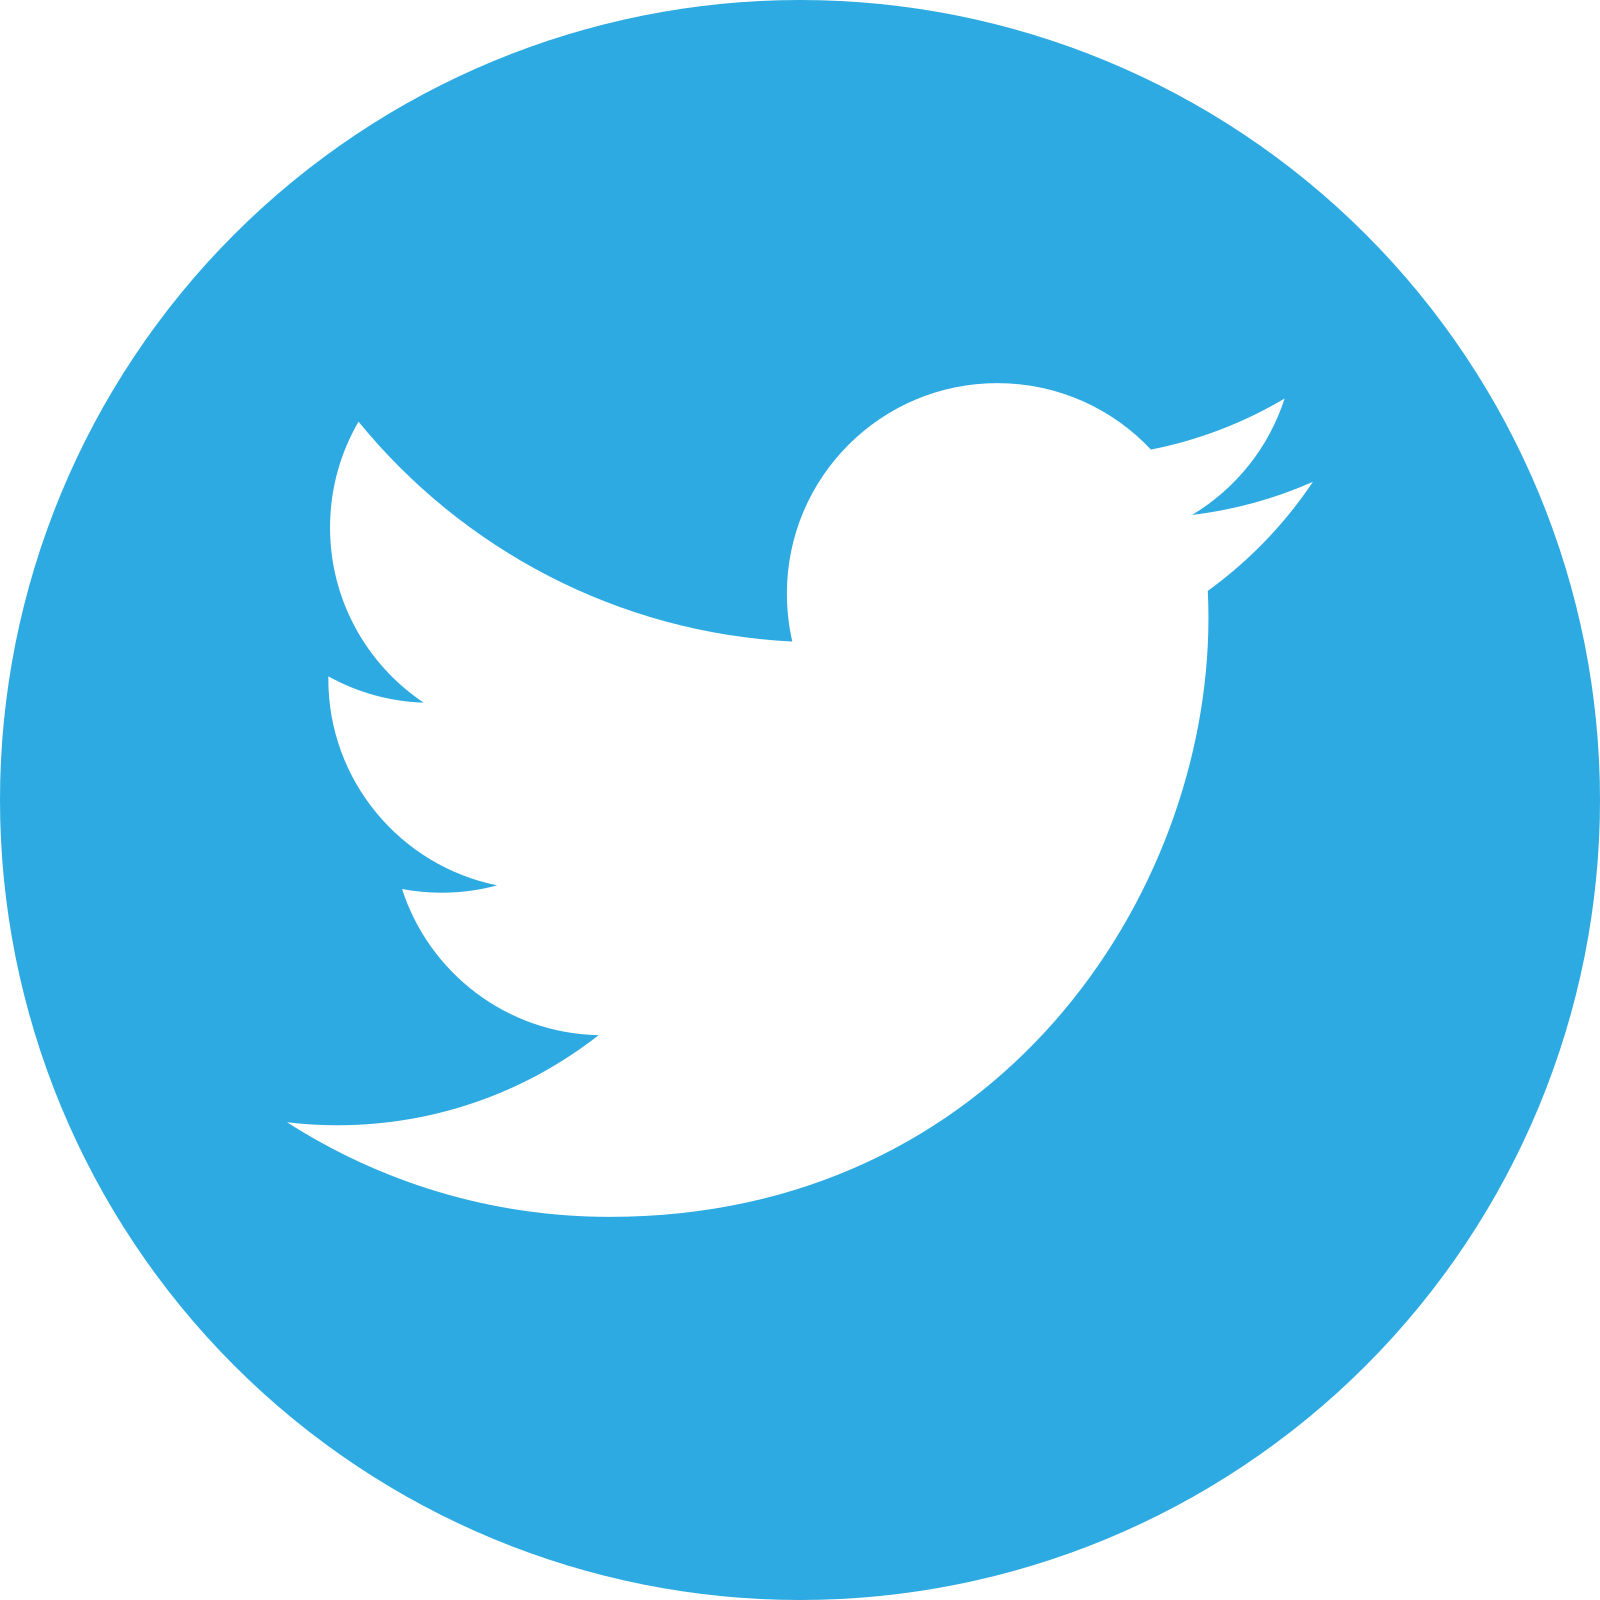 Twitter Logo PNG HD Quality